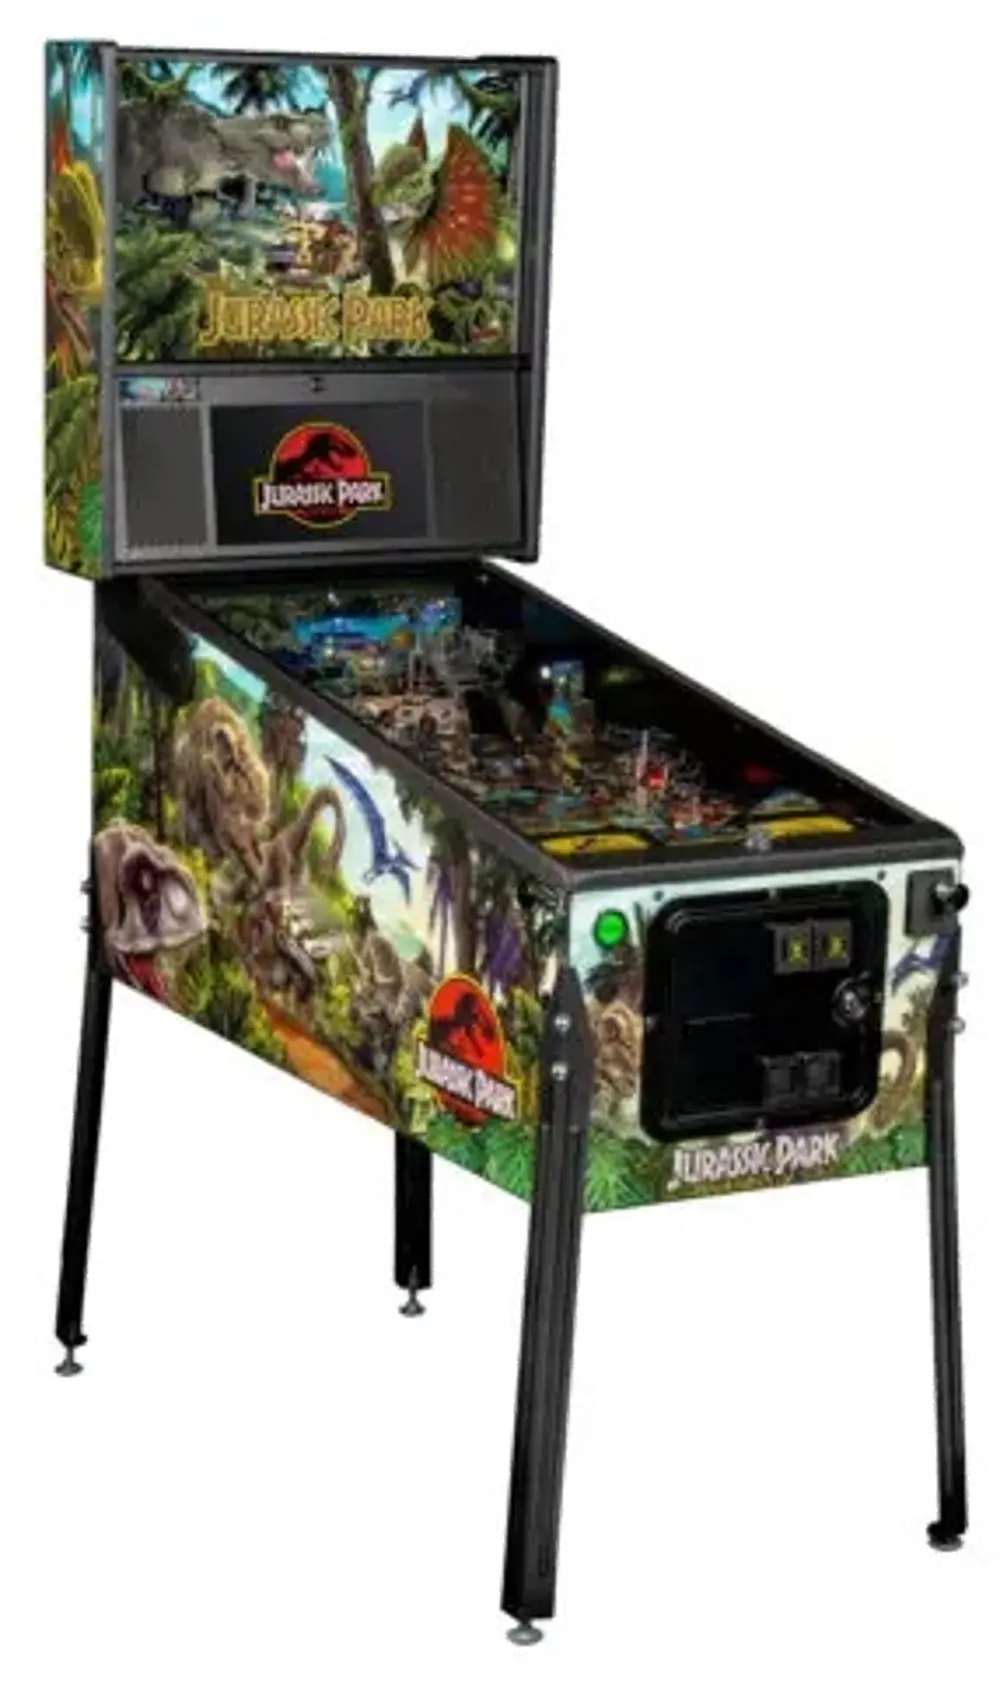 500-55M1-01 Stern Pinball Jurassic Park Pro Edition Pinball Machine-1